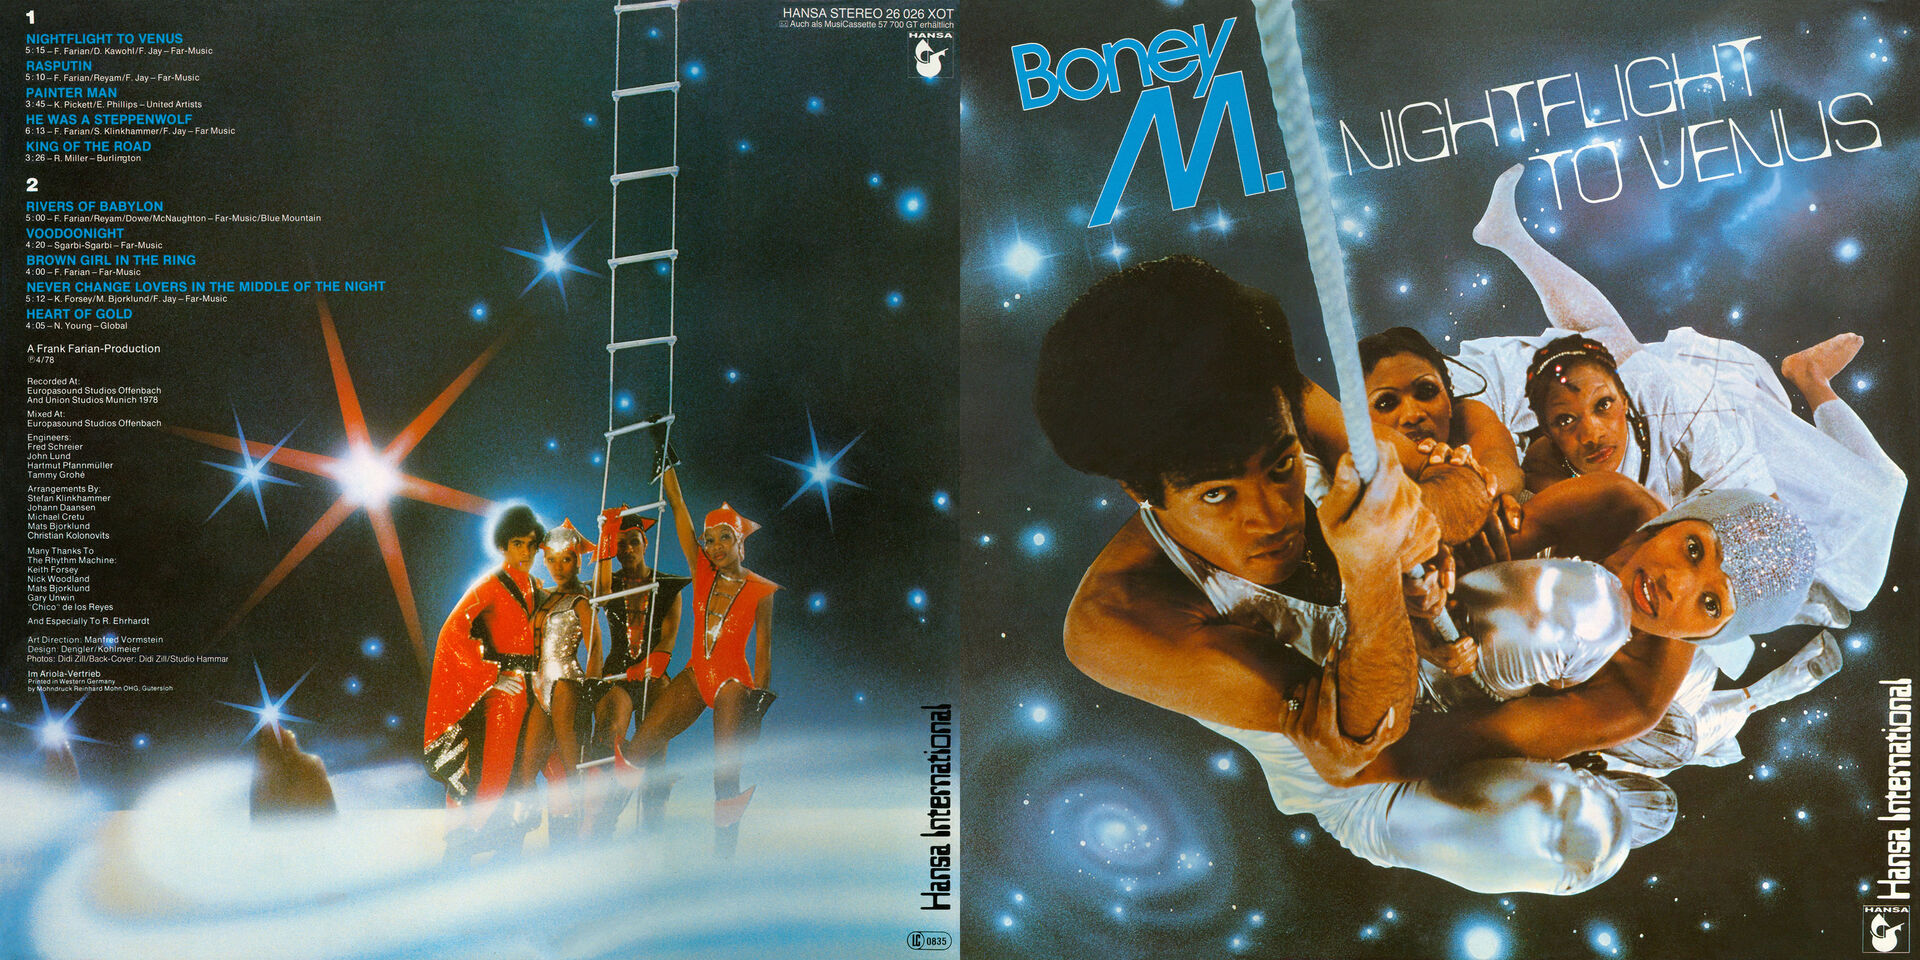 Boney m nightflight. Группа Boney m. 1978. Boney m Nightflight to Venus 1978 альбом. Бони м 1978 альбом года. Обложки пластинок Boney m.